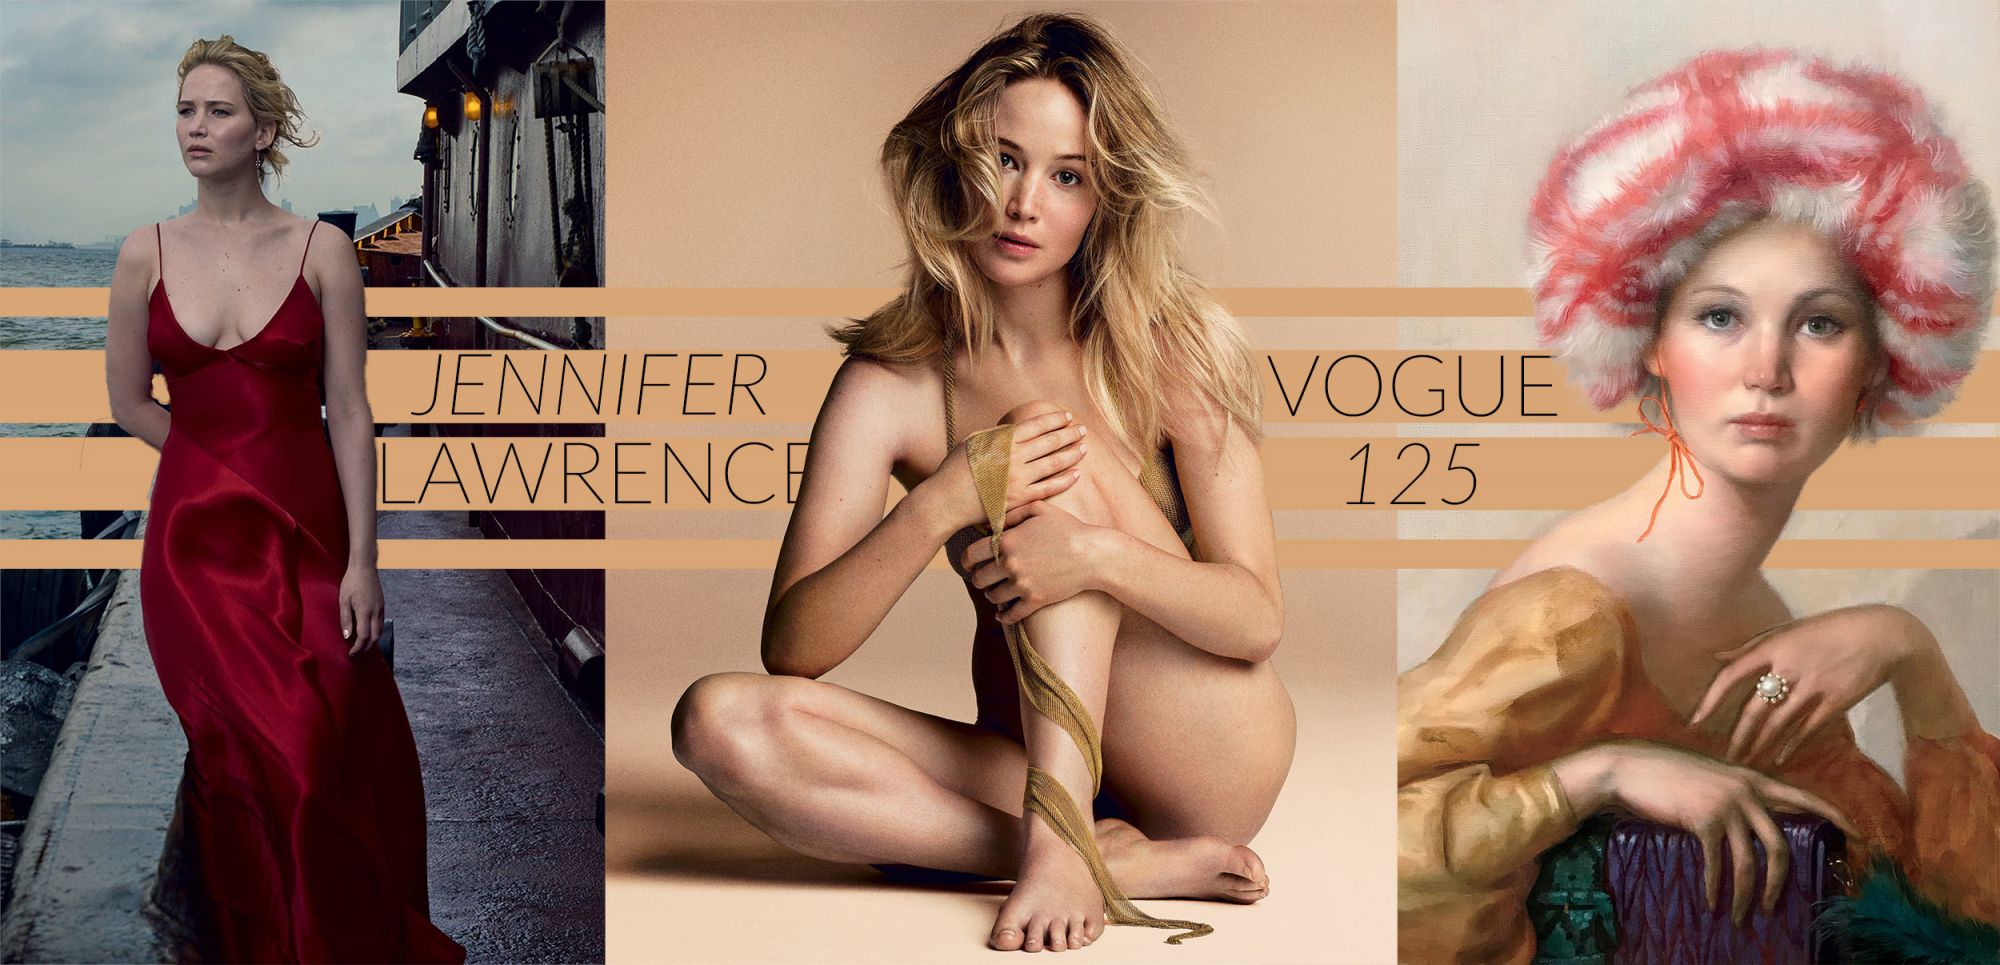 Jennifer Lawrence Vogue Photoshoot Wallpapers